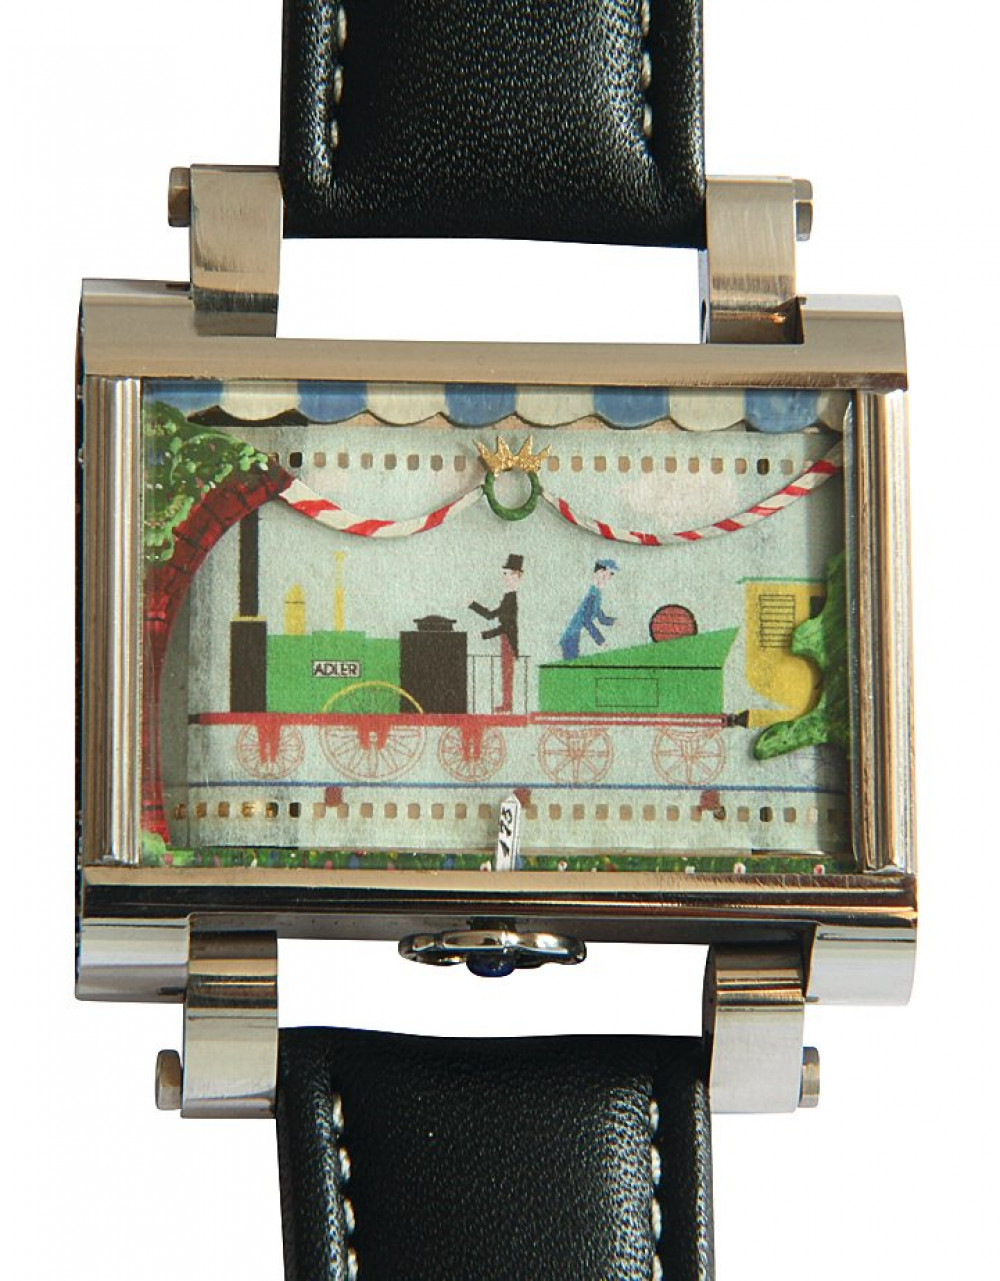 Zegarek firmy Bleitz, model Adler